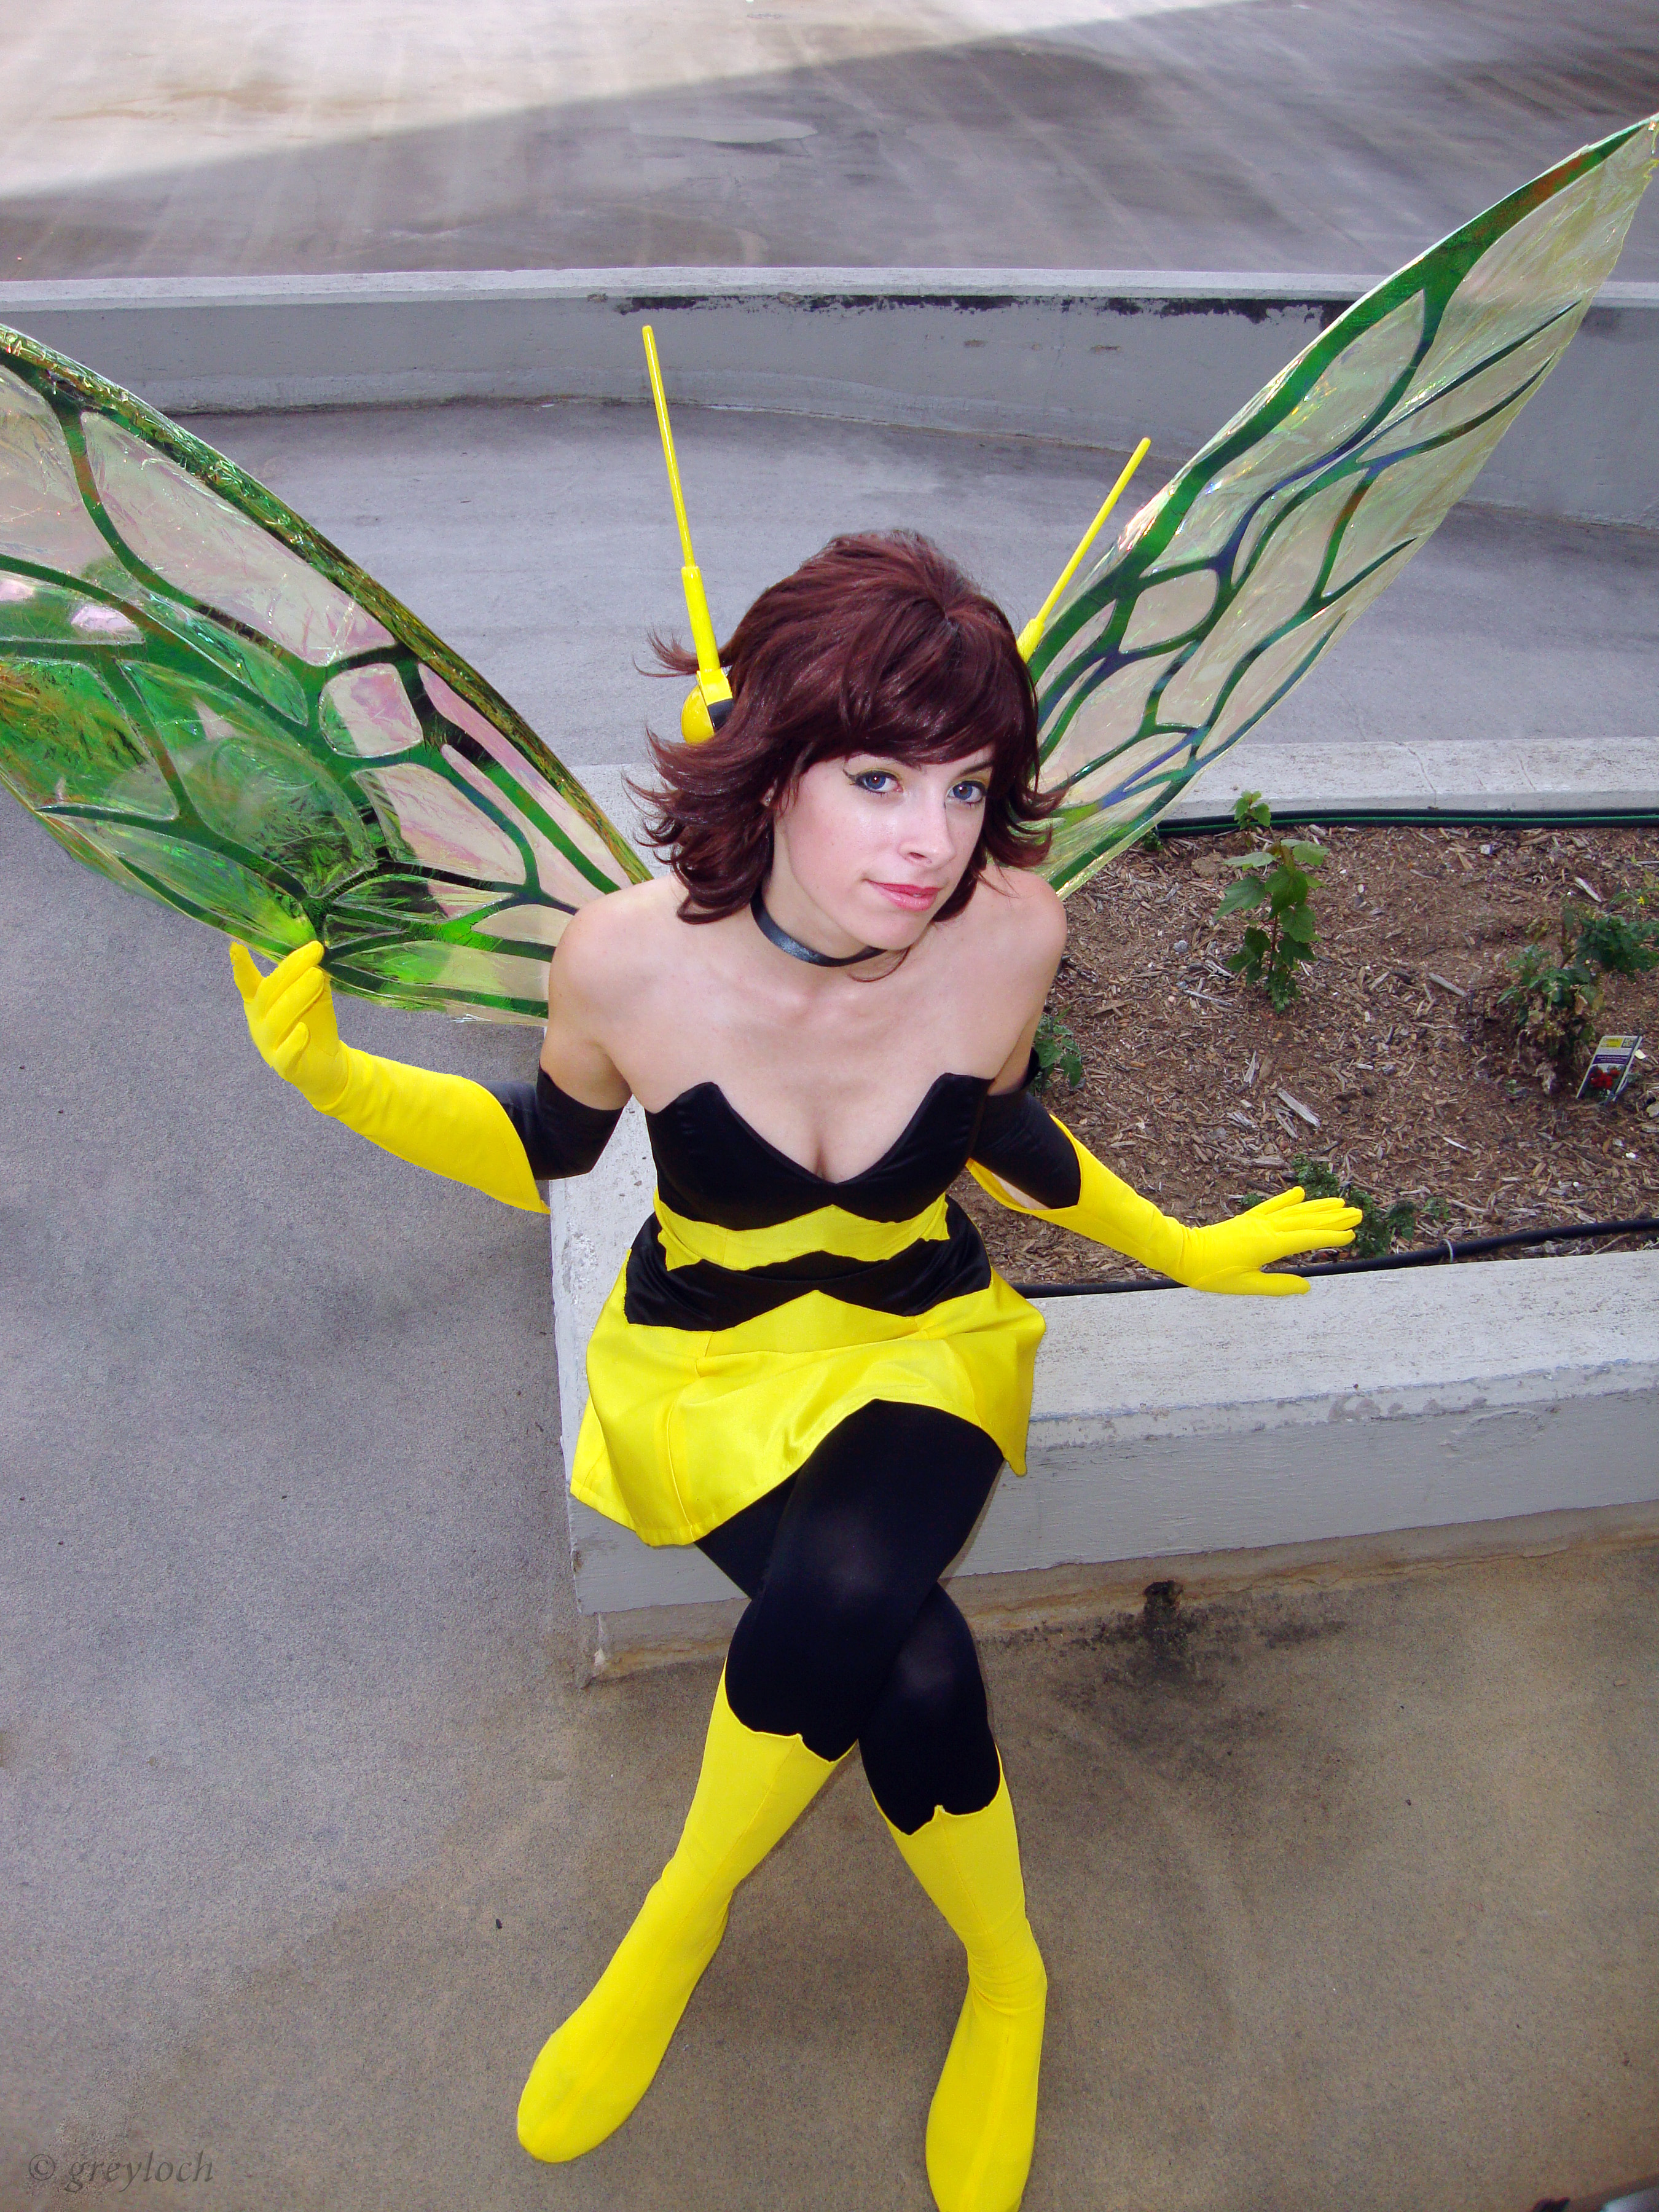 The Wasp | Flickr - Photo Sharing!